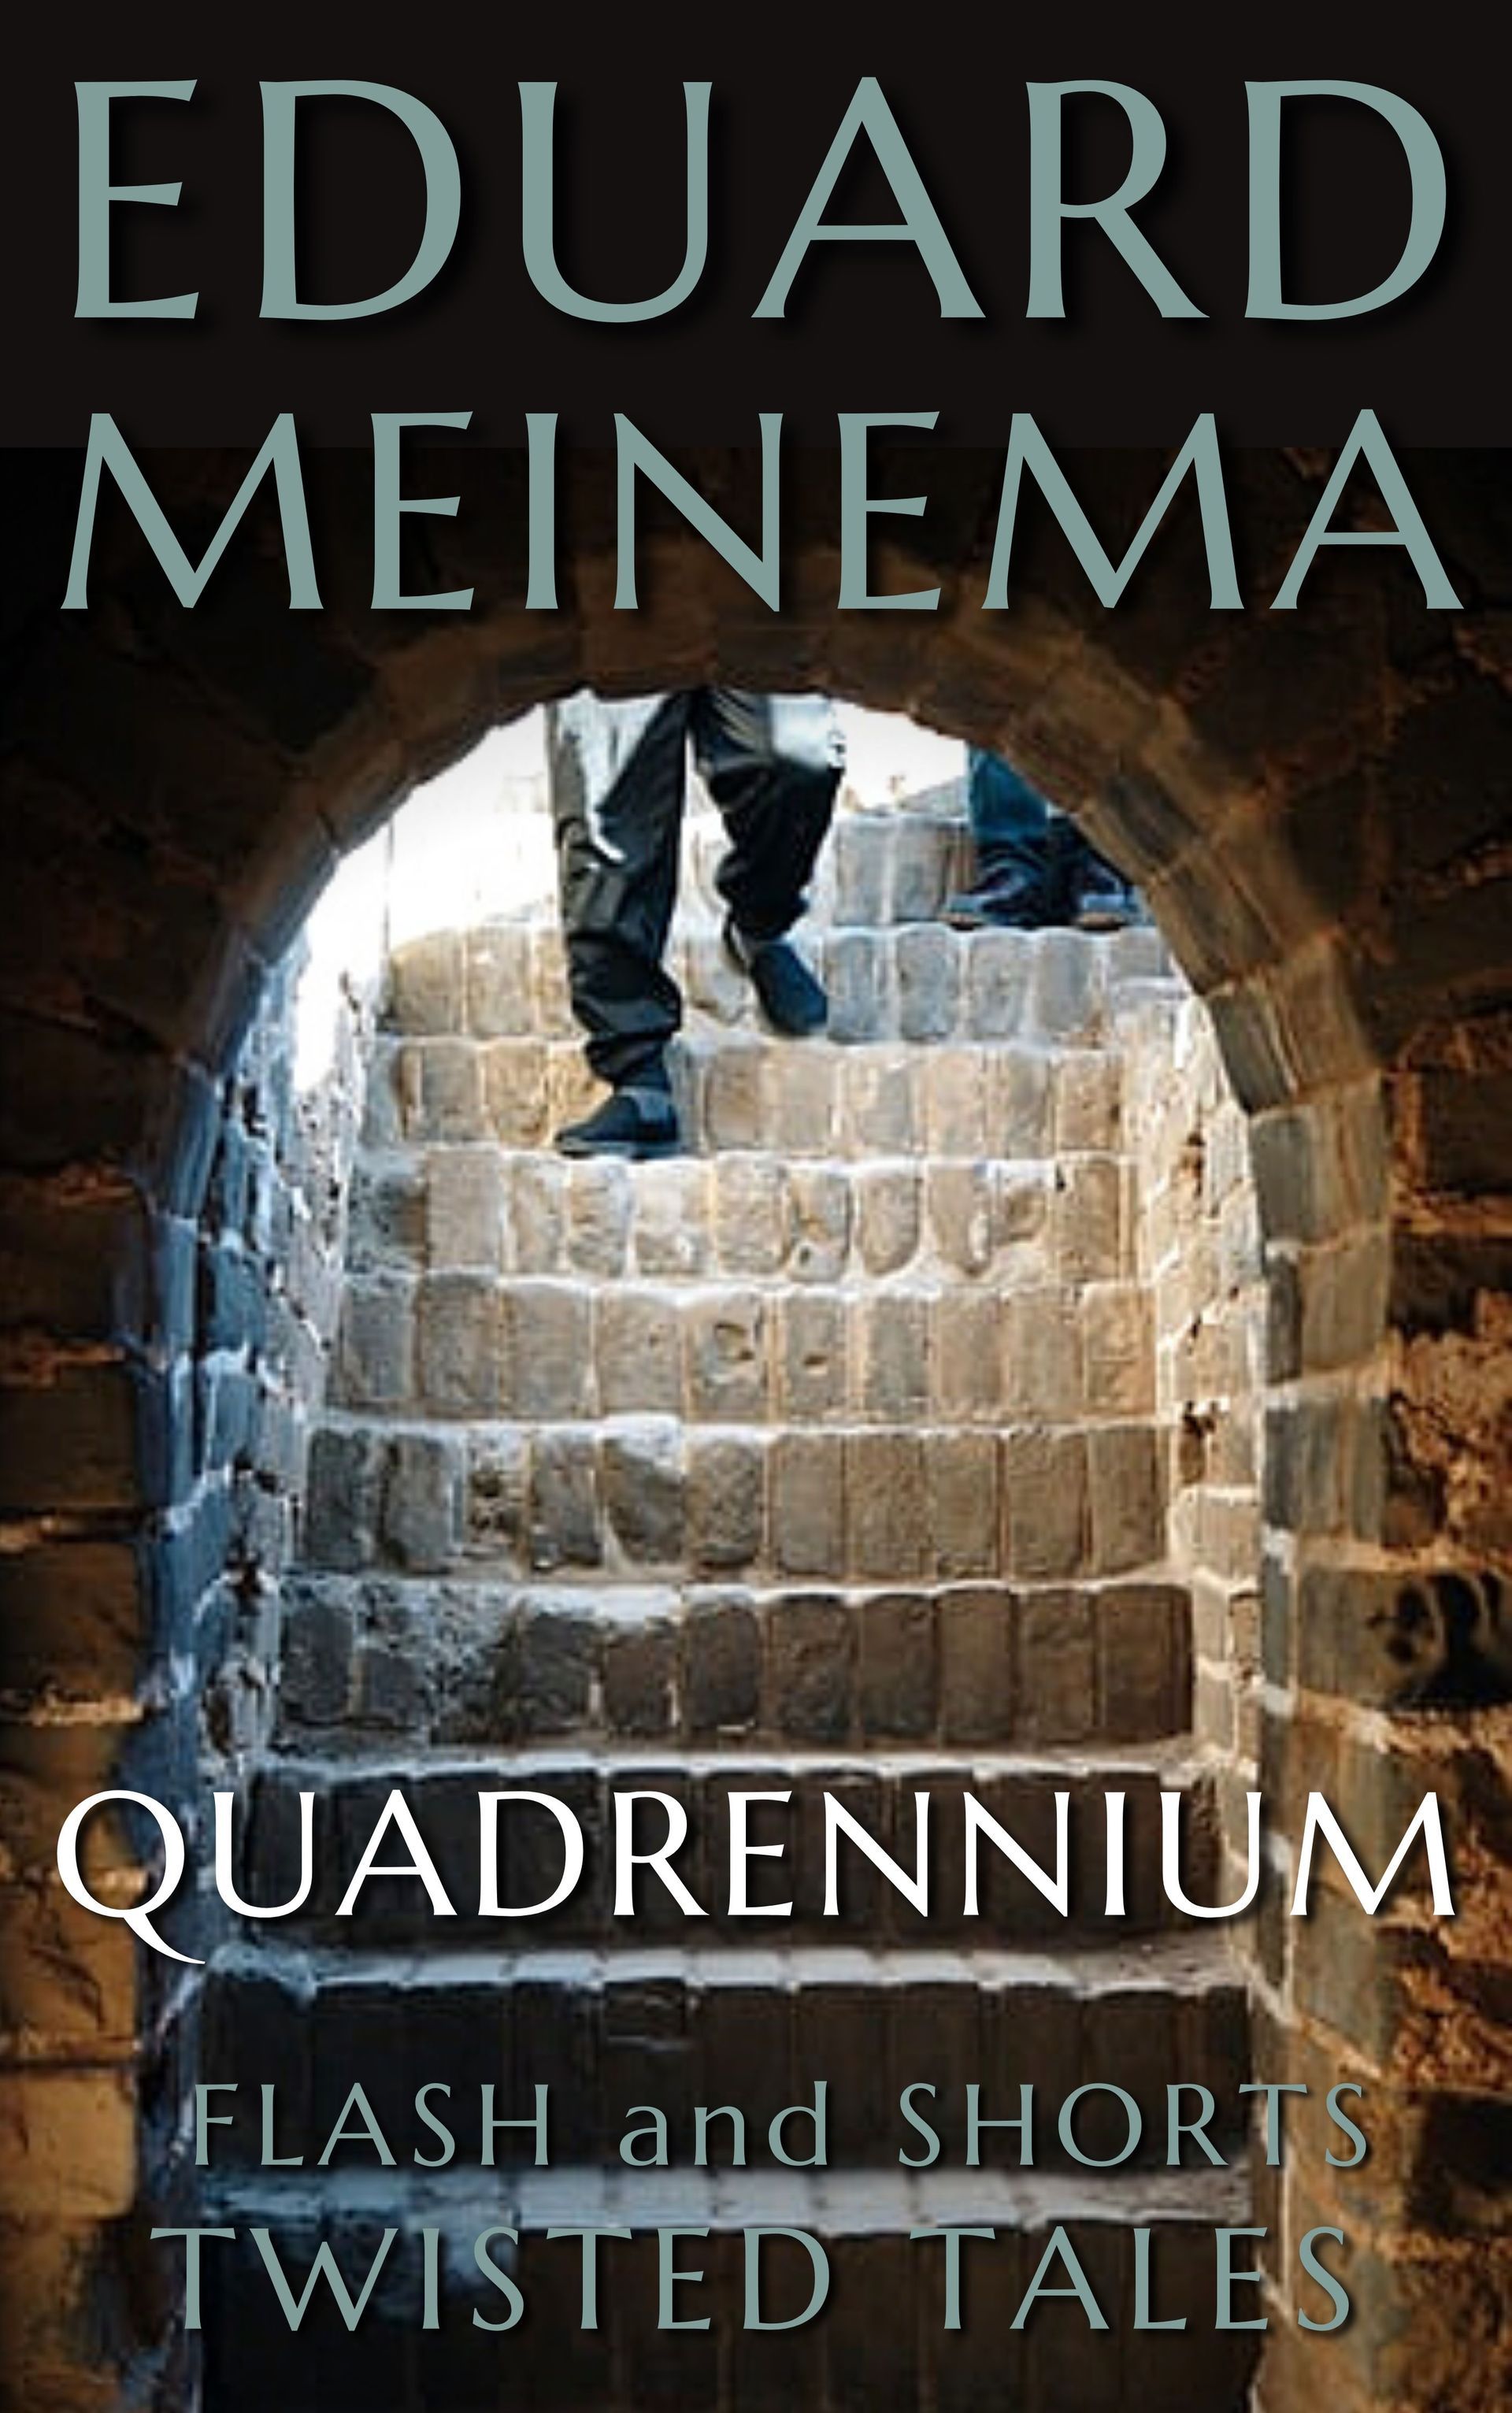 Quadrennium, Flash Fiction (ultrakort) verhaal van Eduard Meinema.